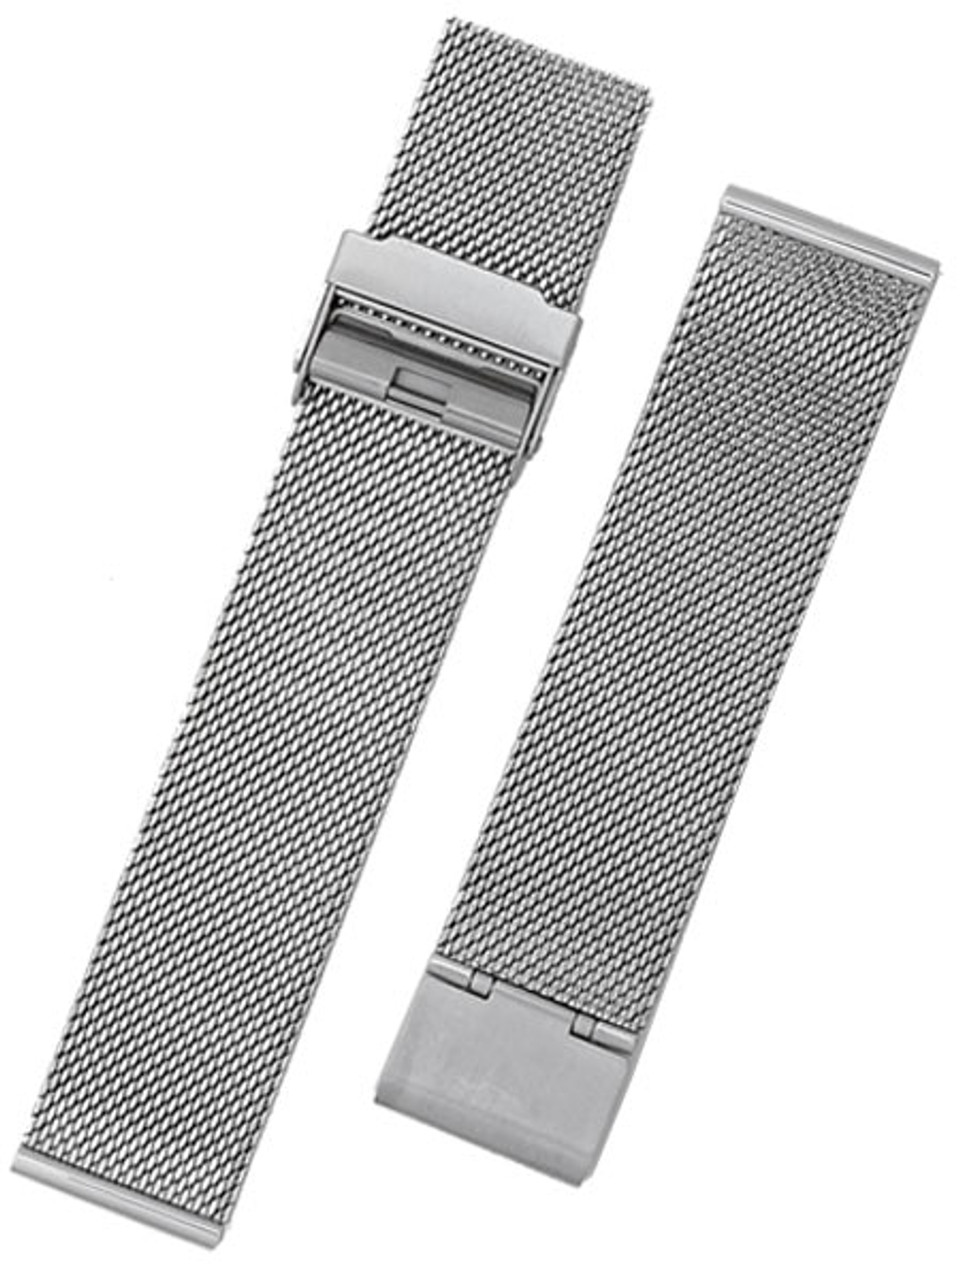 Staib Polished Mesh Bracelet #ST-ST-2905-20806SBL (Straight End, 18mm)